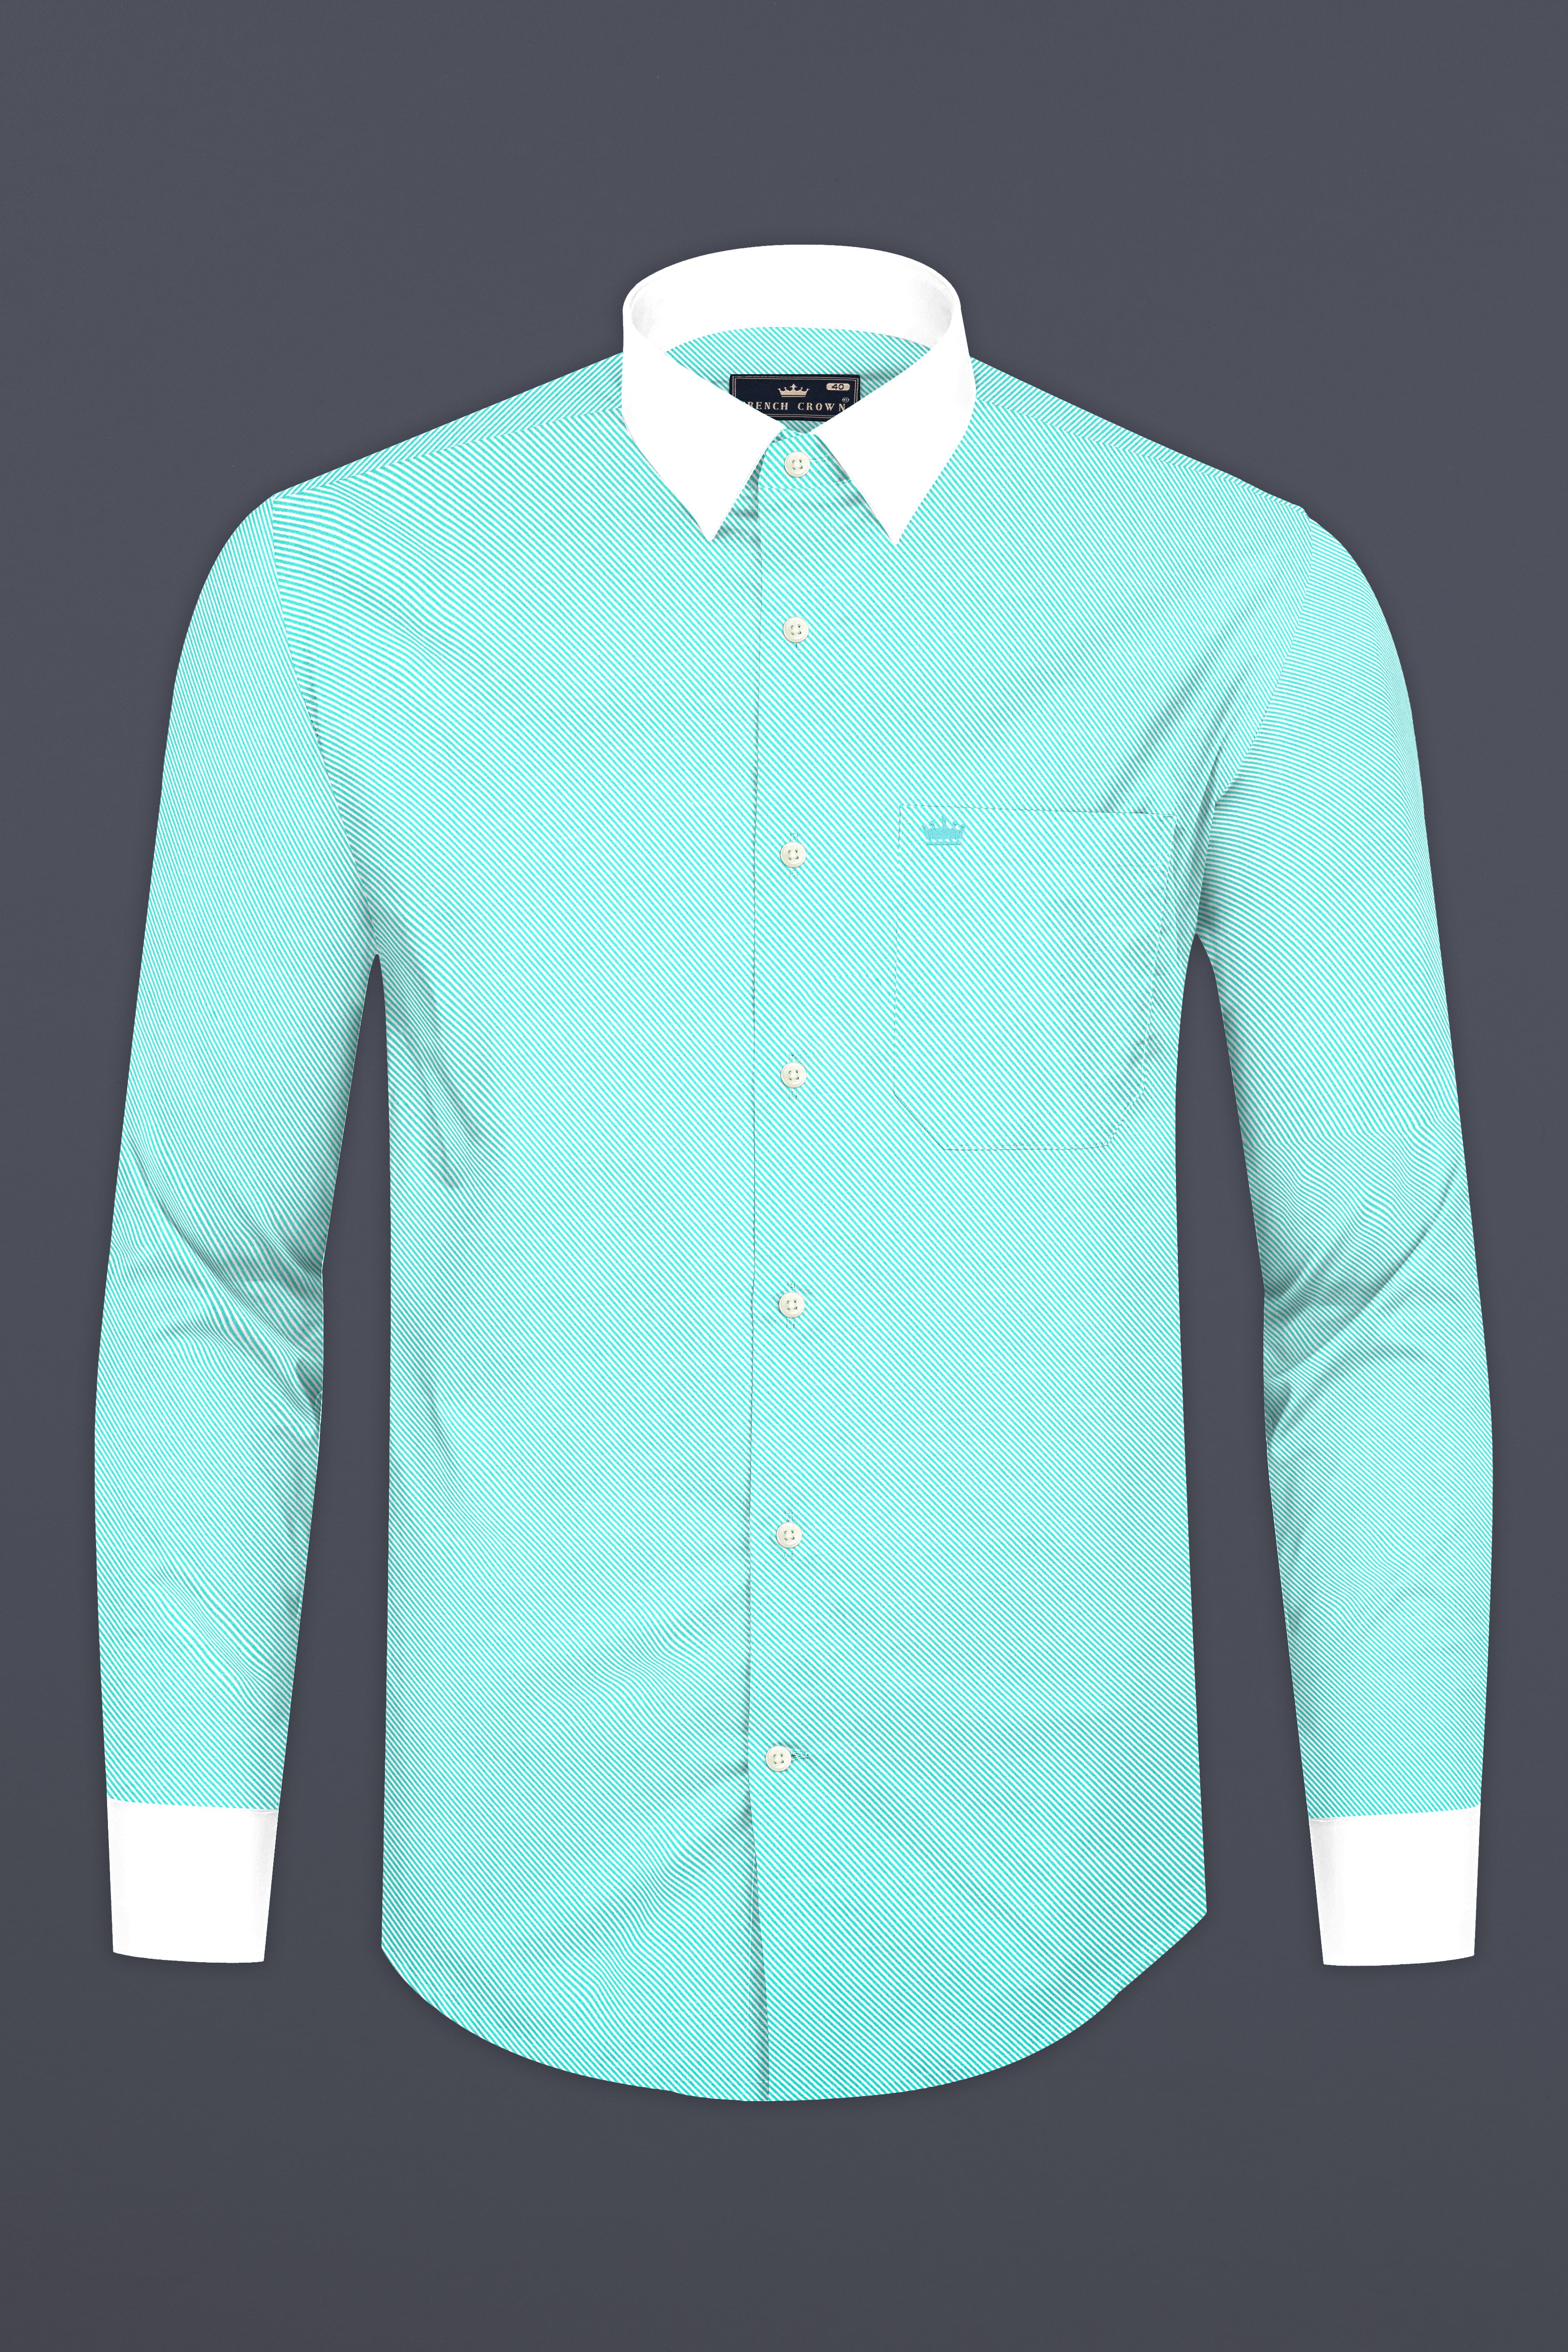 Seafoam Blue Jacquard Textured Premium Cotton Shirt